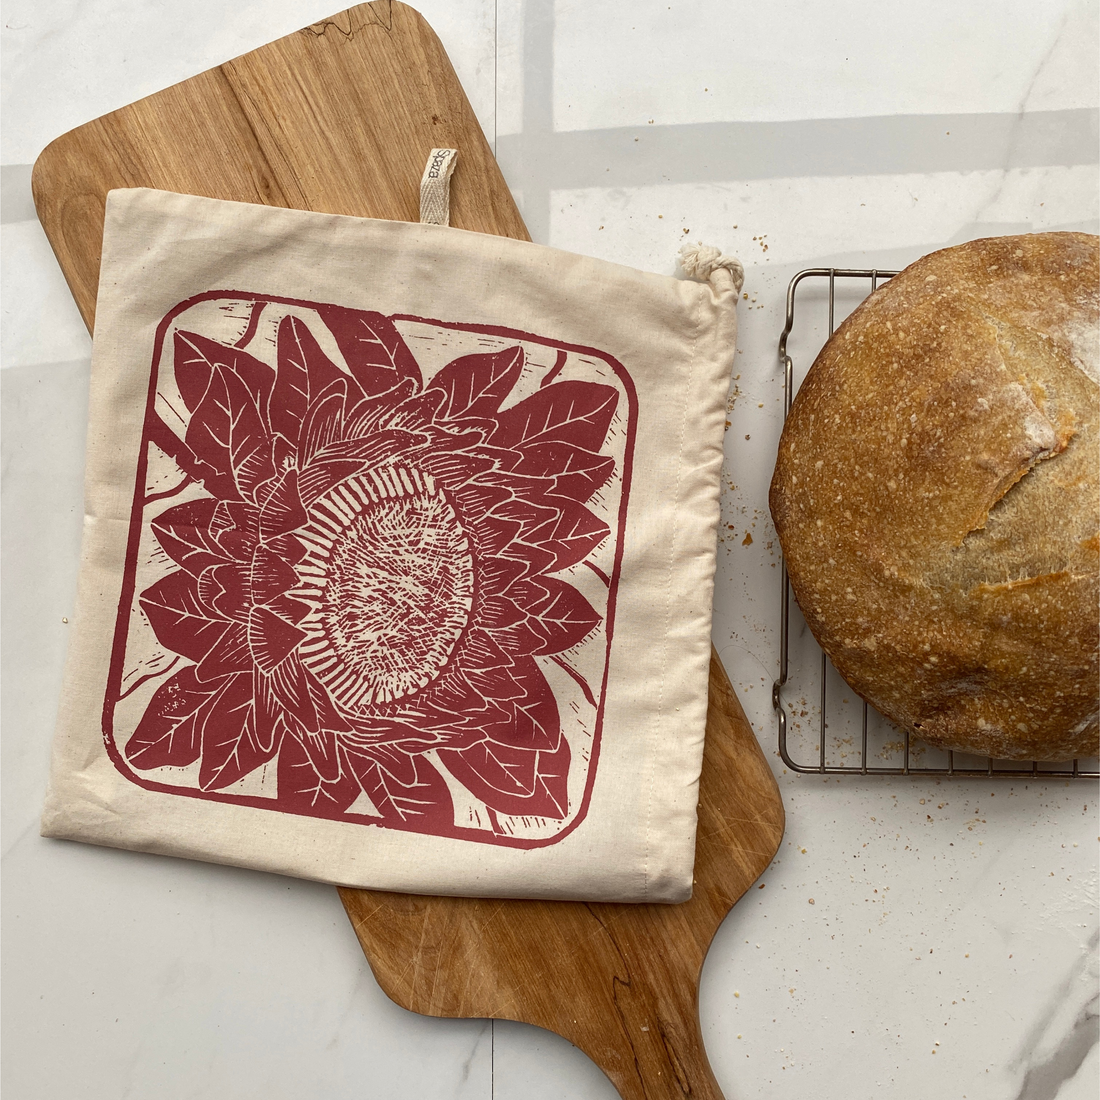 The Beginner's Guide to Sourdough Bread